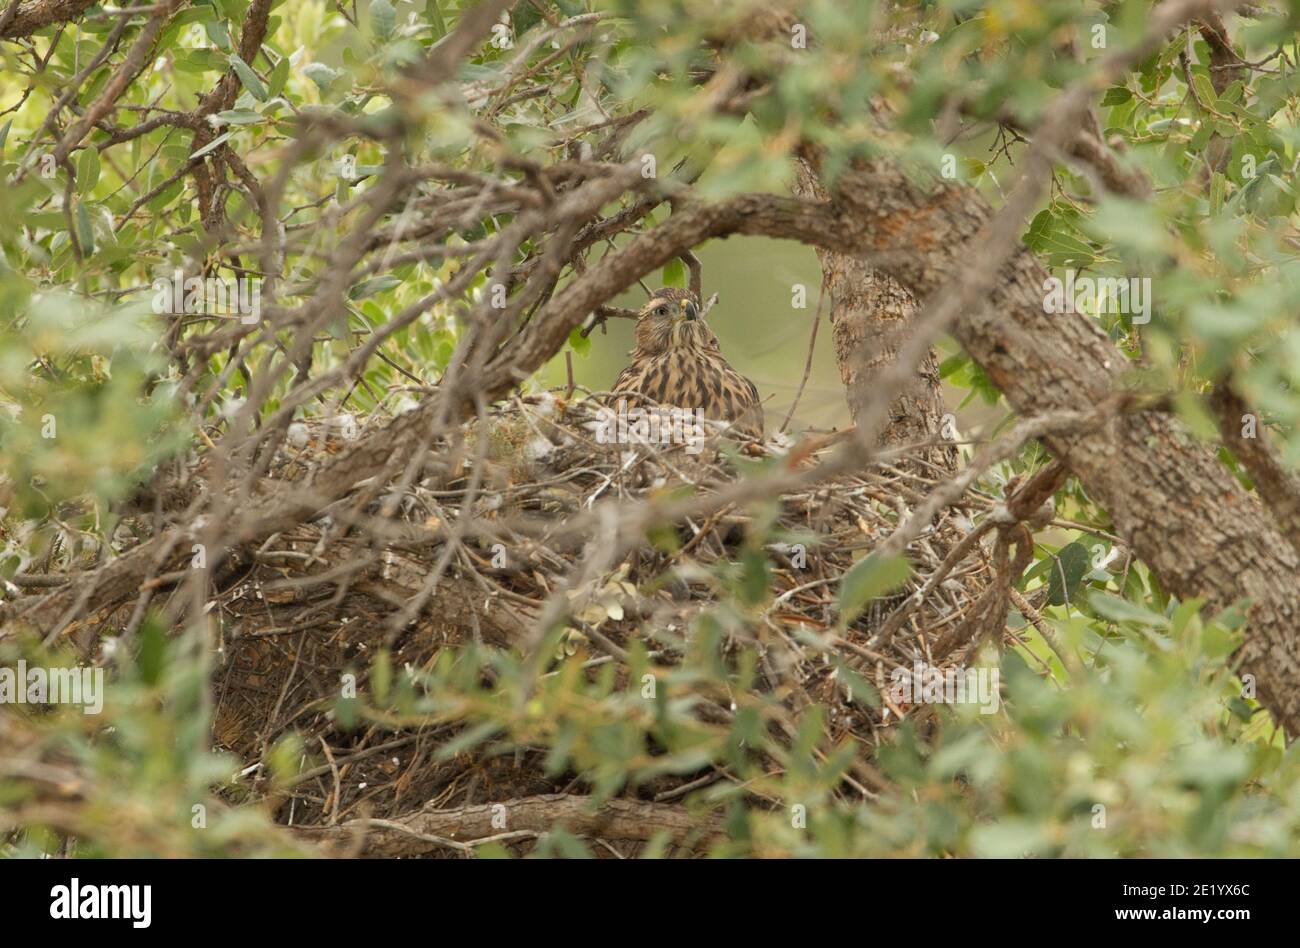 Northern Goshawk nestling, Accipiter gentilis, on nest in oak tree. Stock Photo